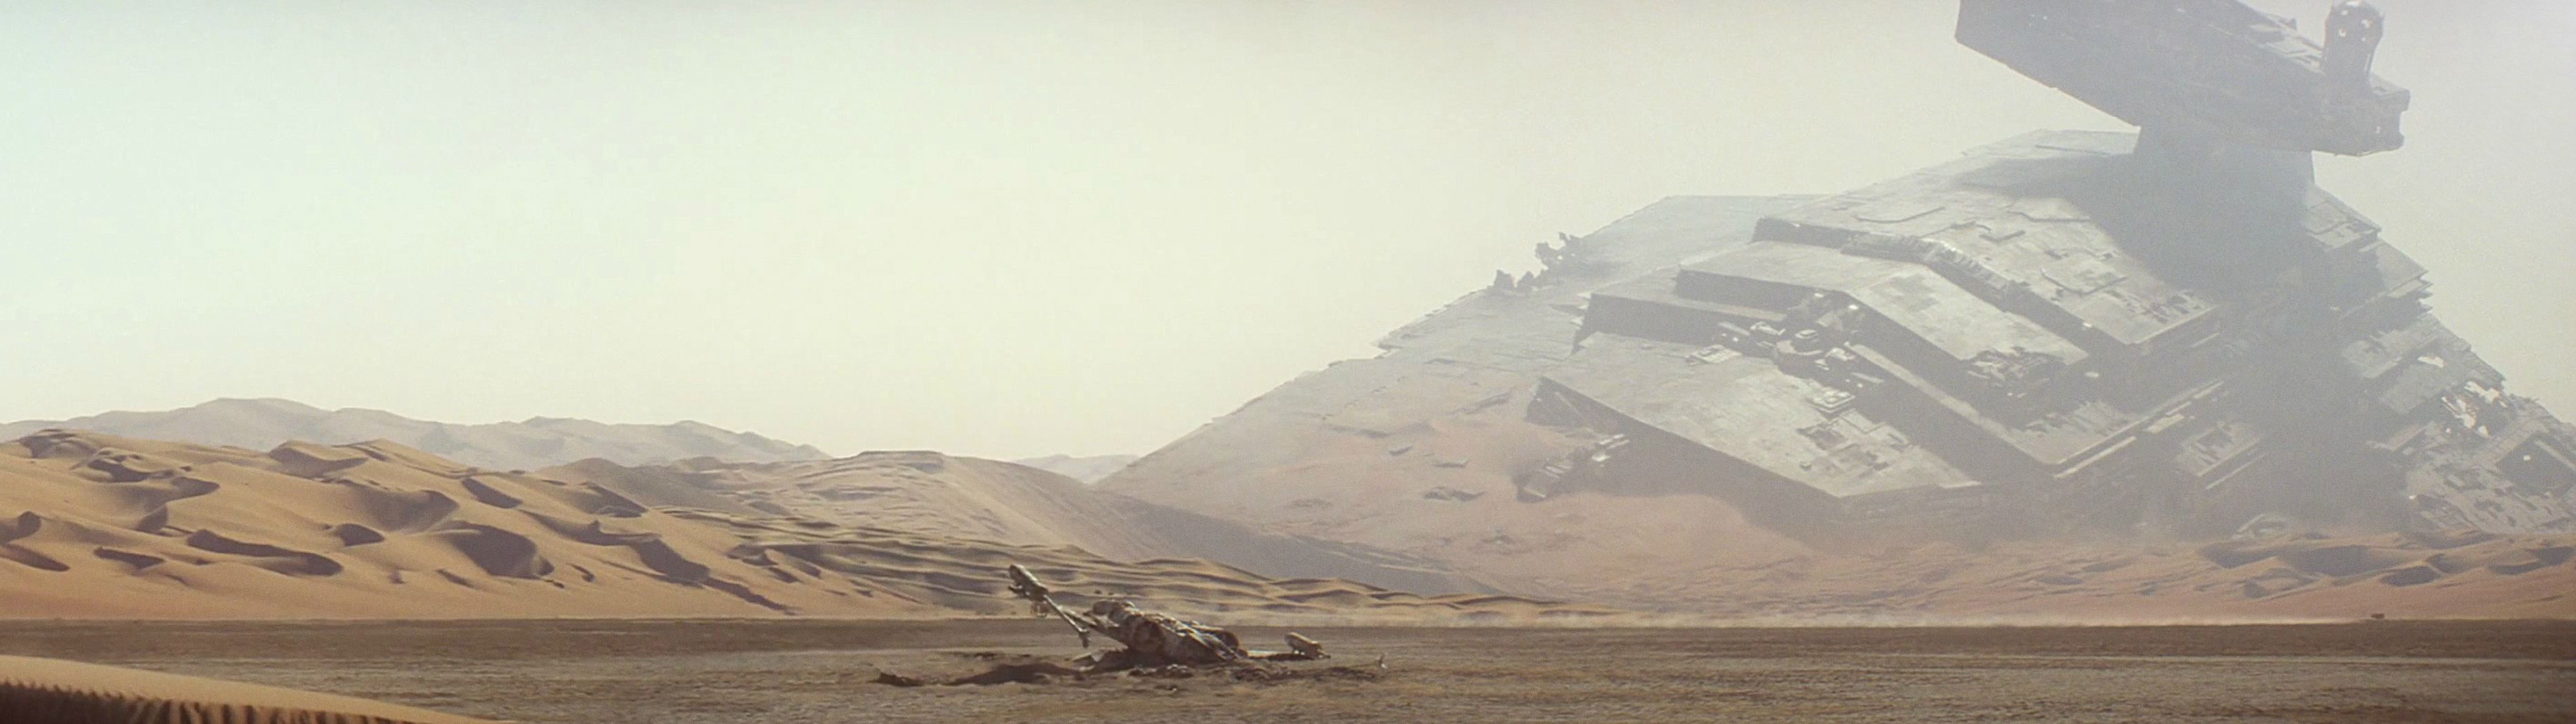 Tatooine Wallpaper. Tatooine Wallpaper